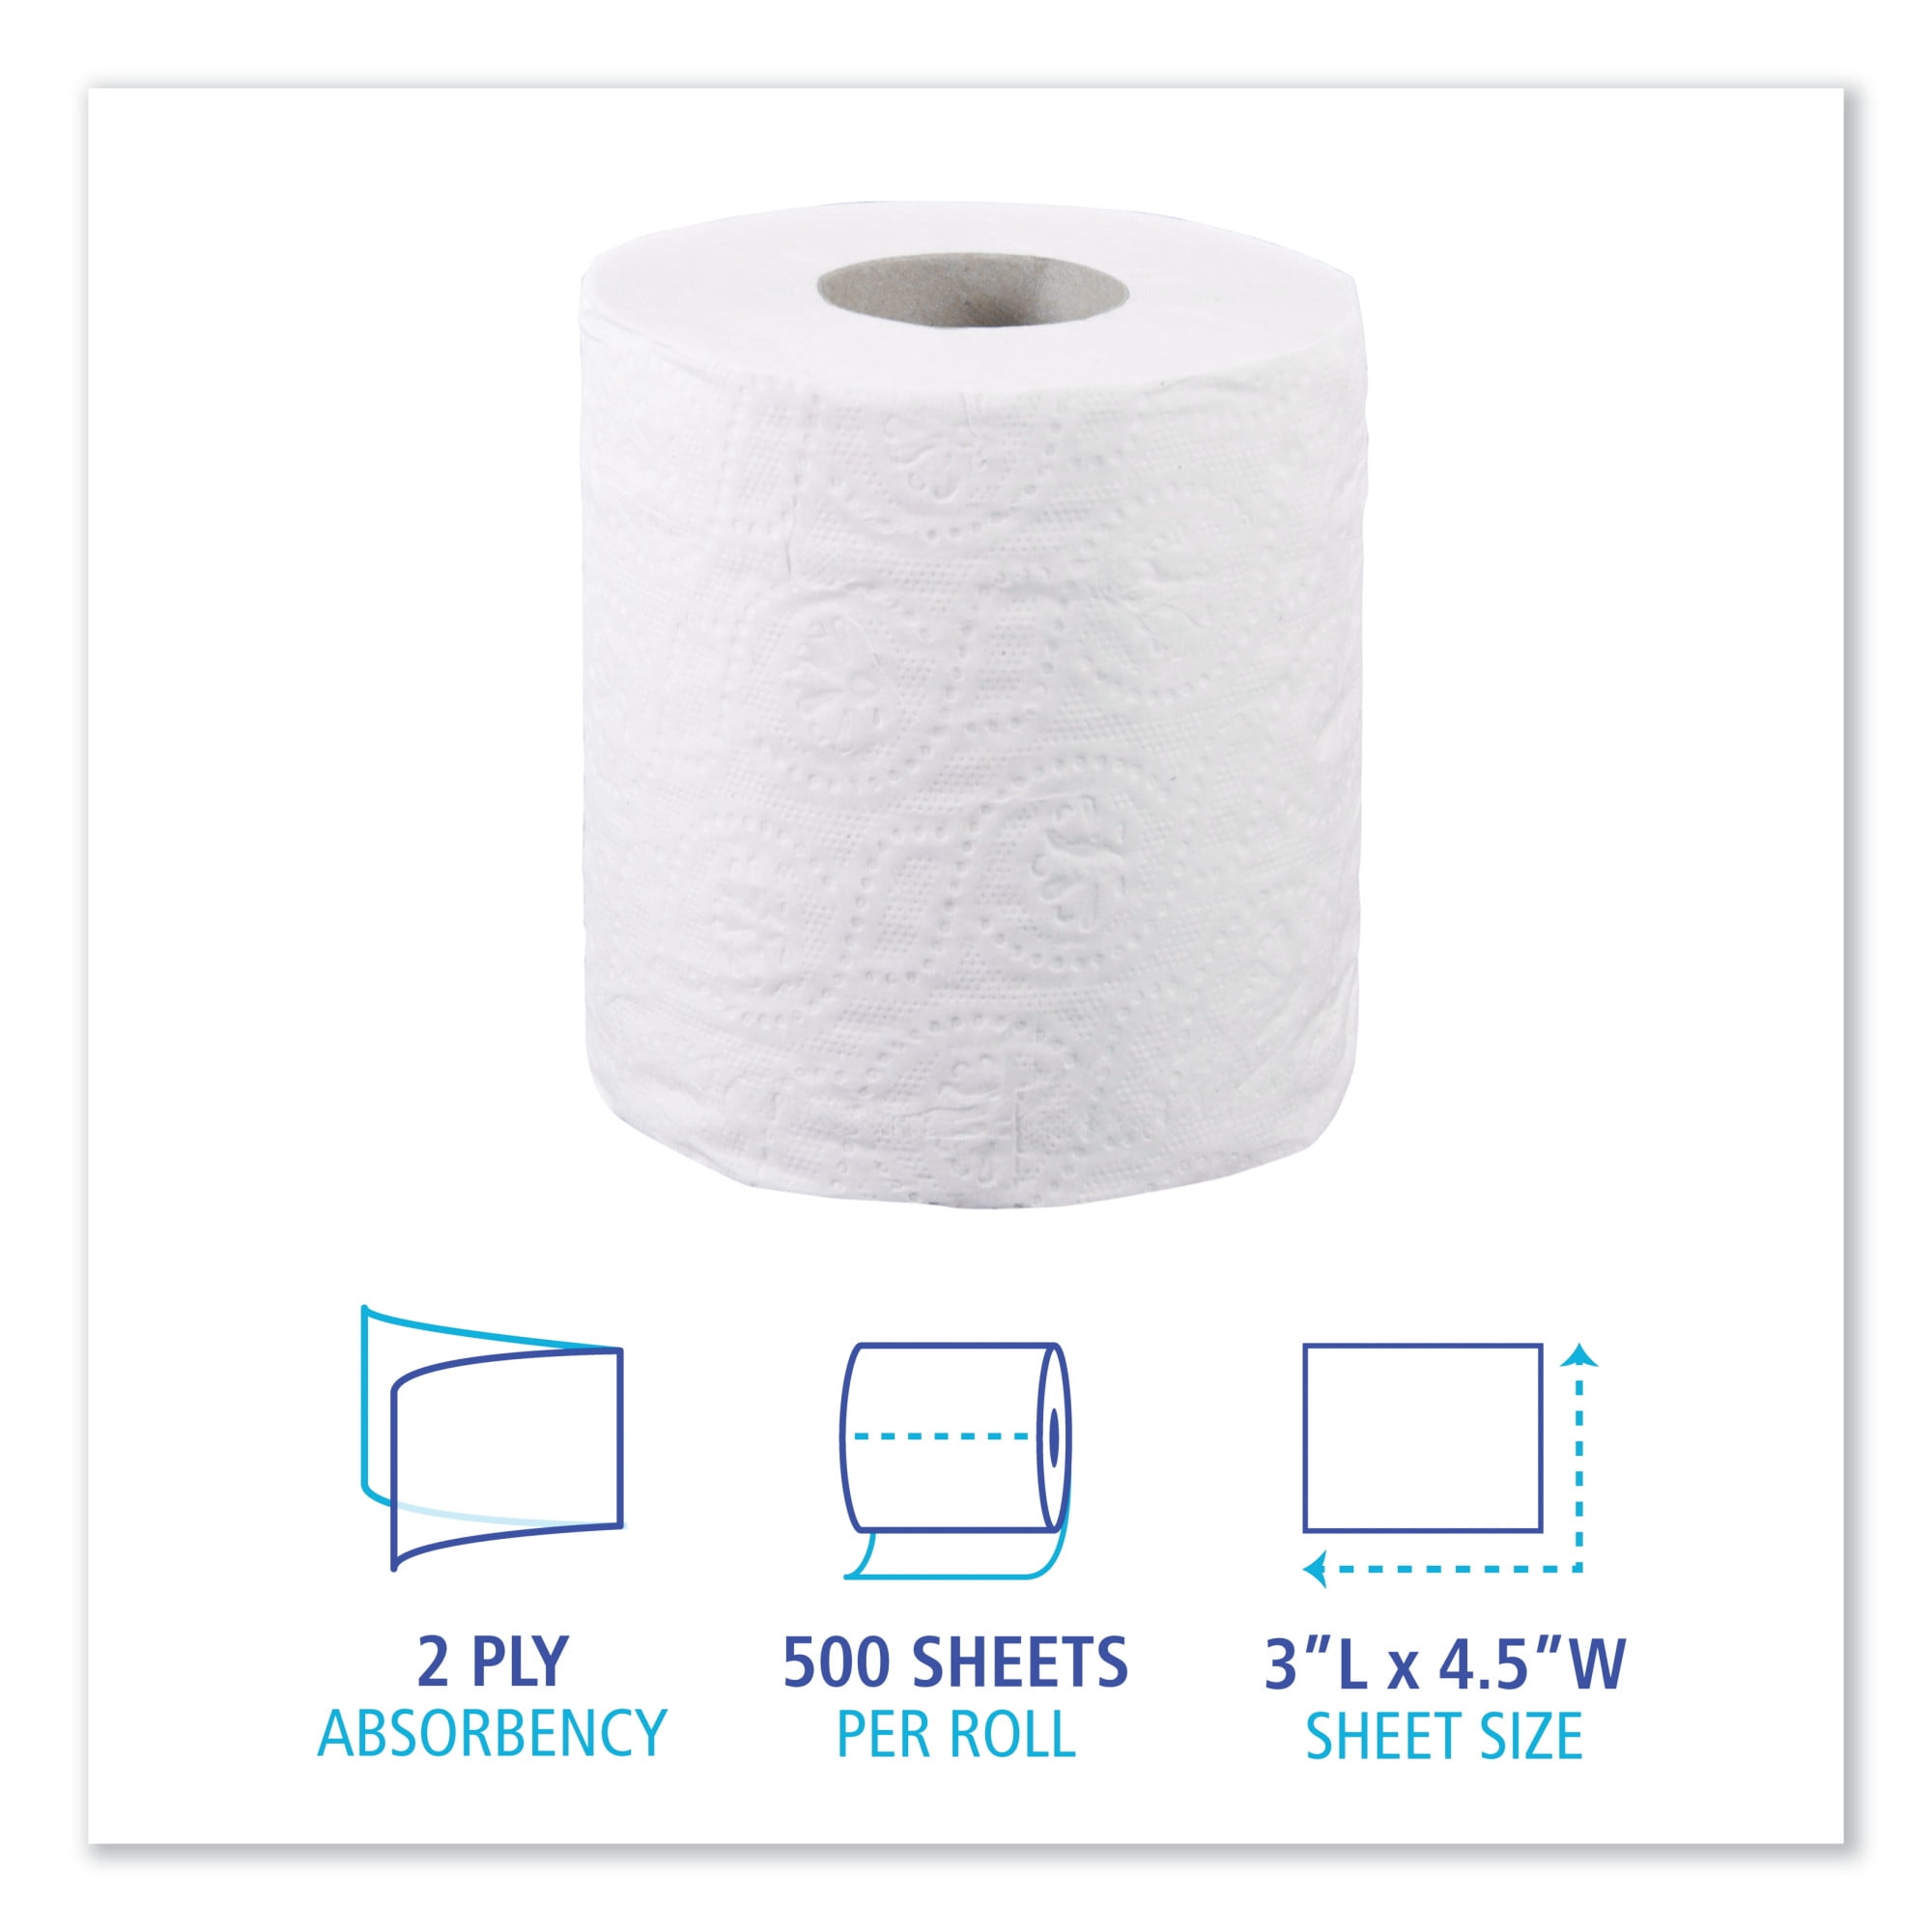 Boardwalk Bathroom Tissue Standard 2-Ply White 4 x 3 Sheet 500 Sheets/Roll 96 